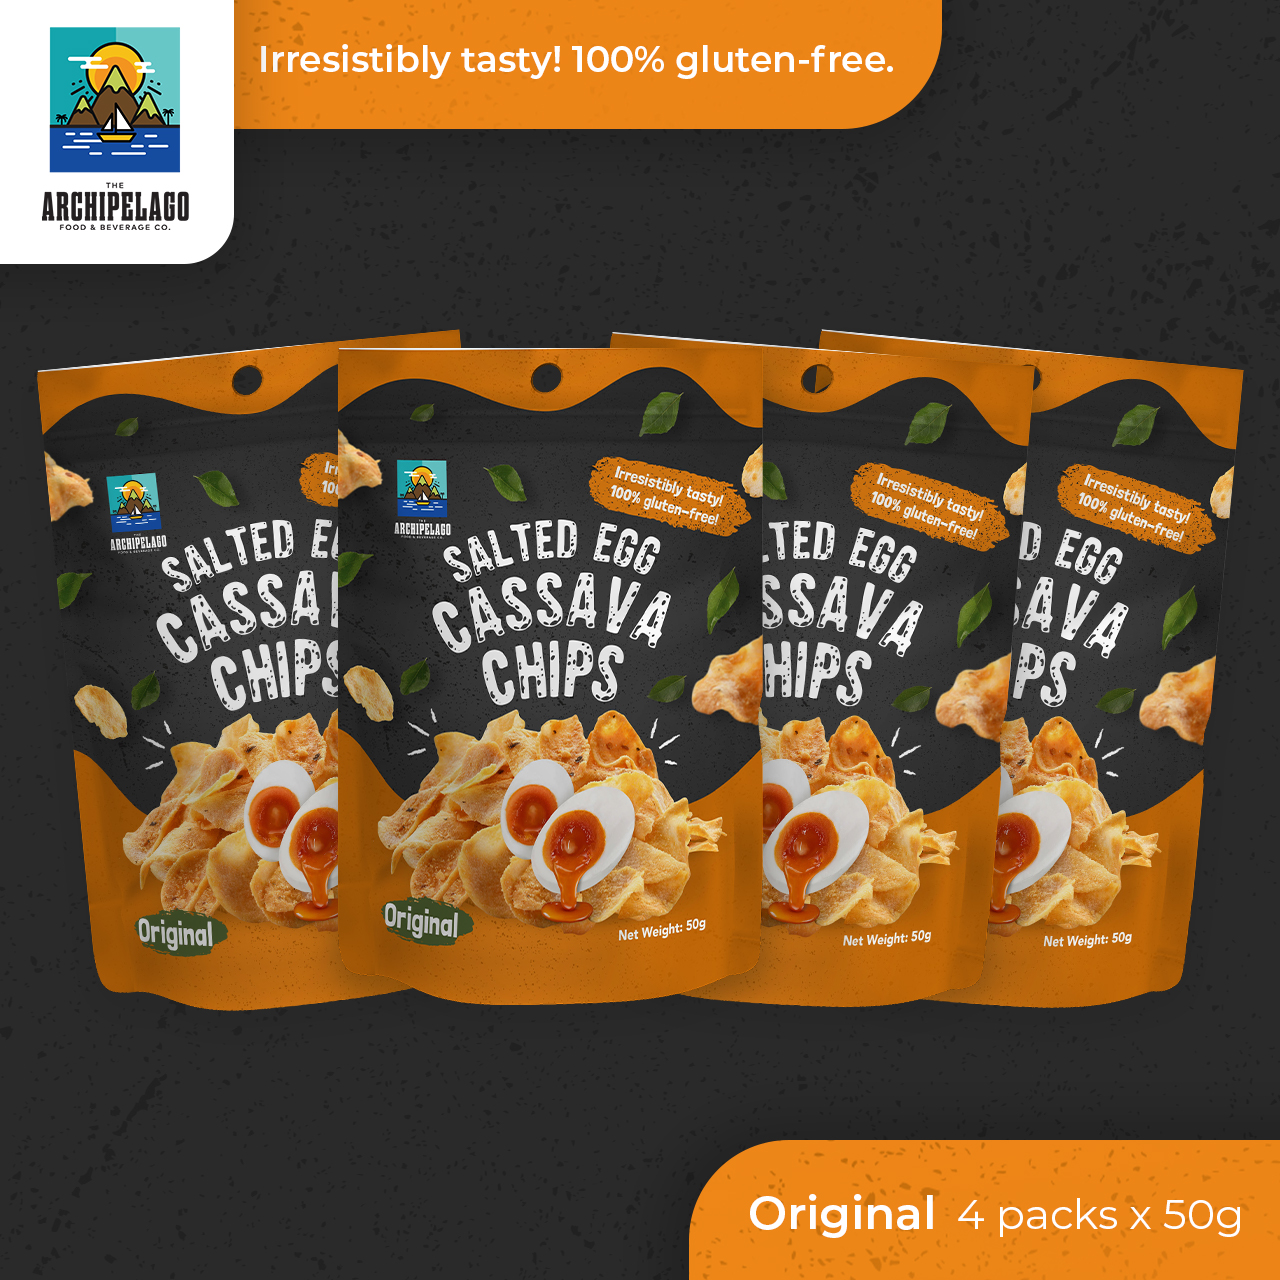 The Archipelago Salted Egg Cassava Chips Original Flavor 4 X 50g